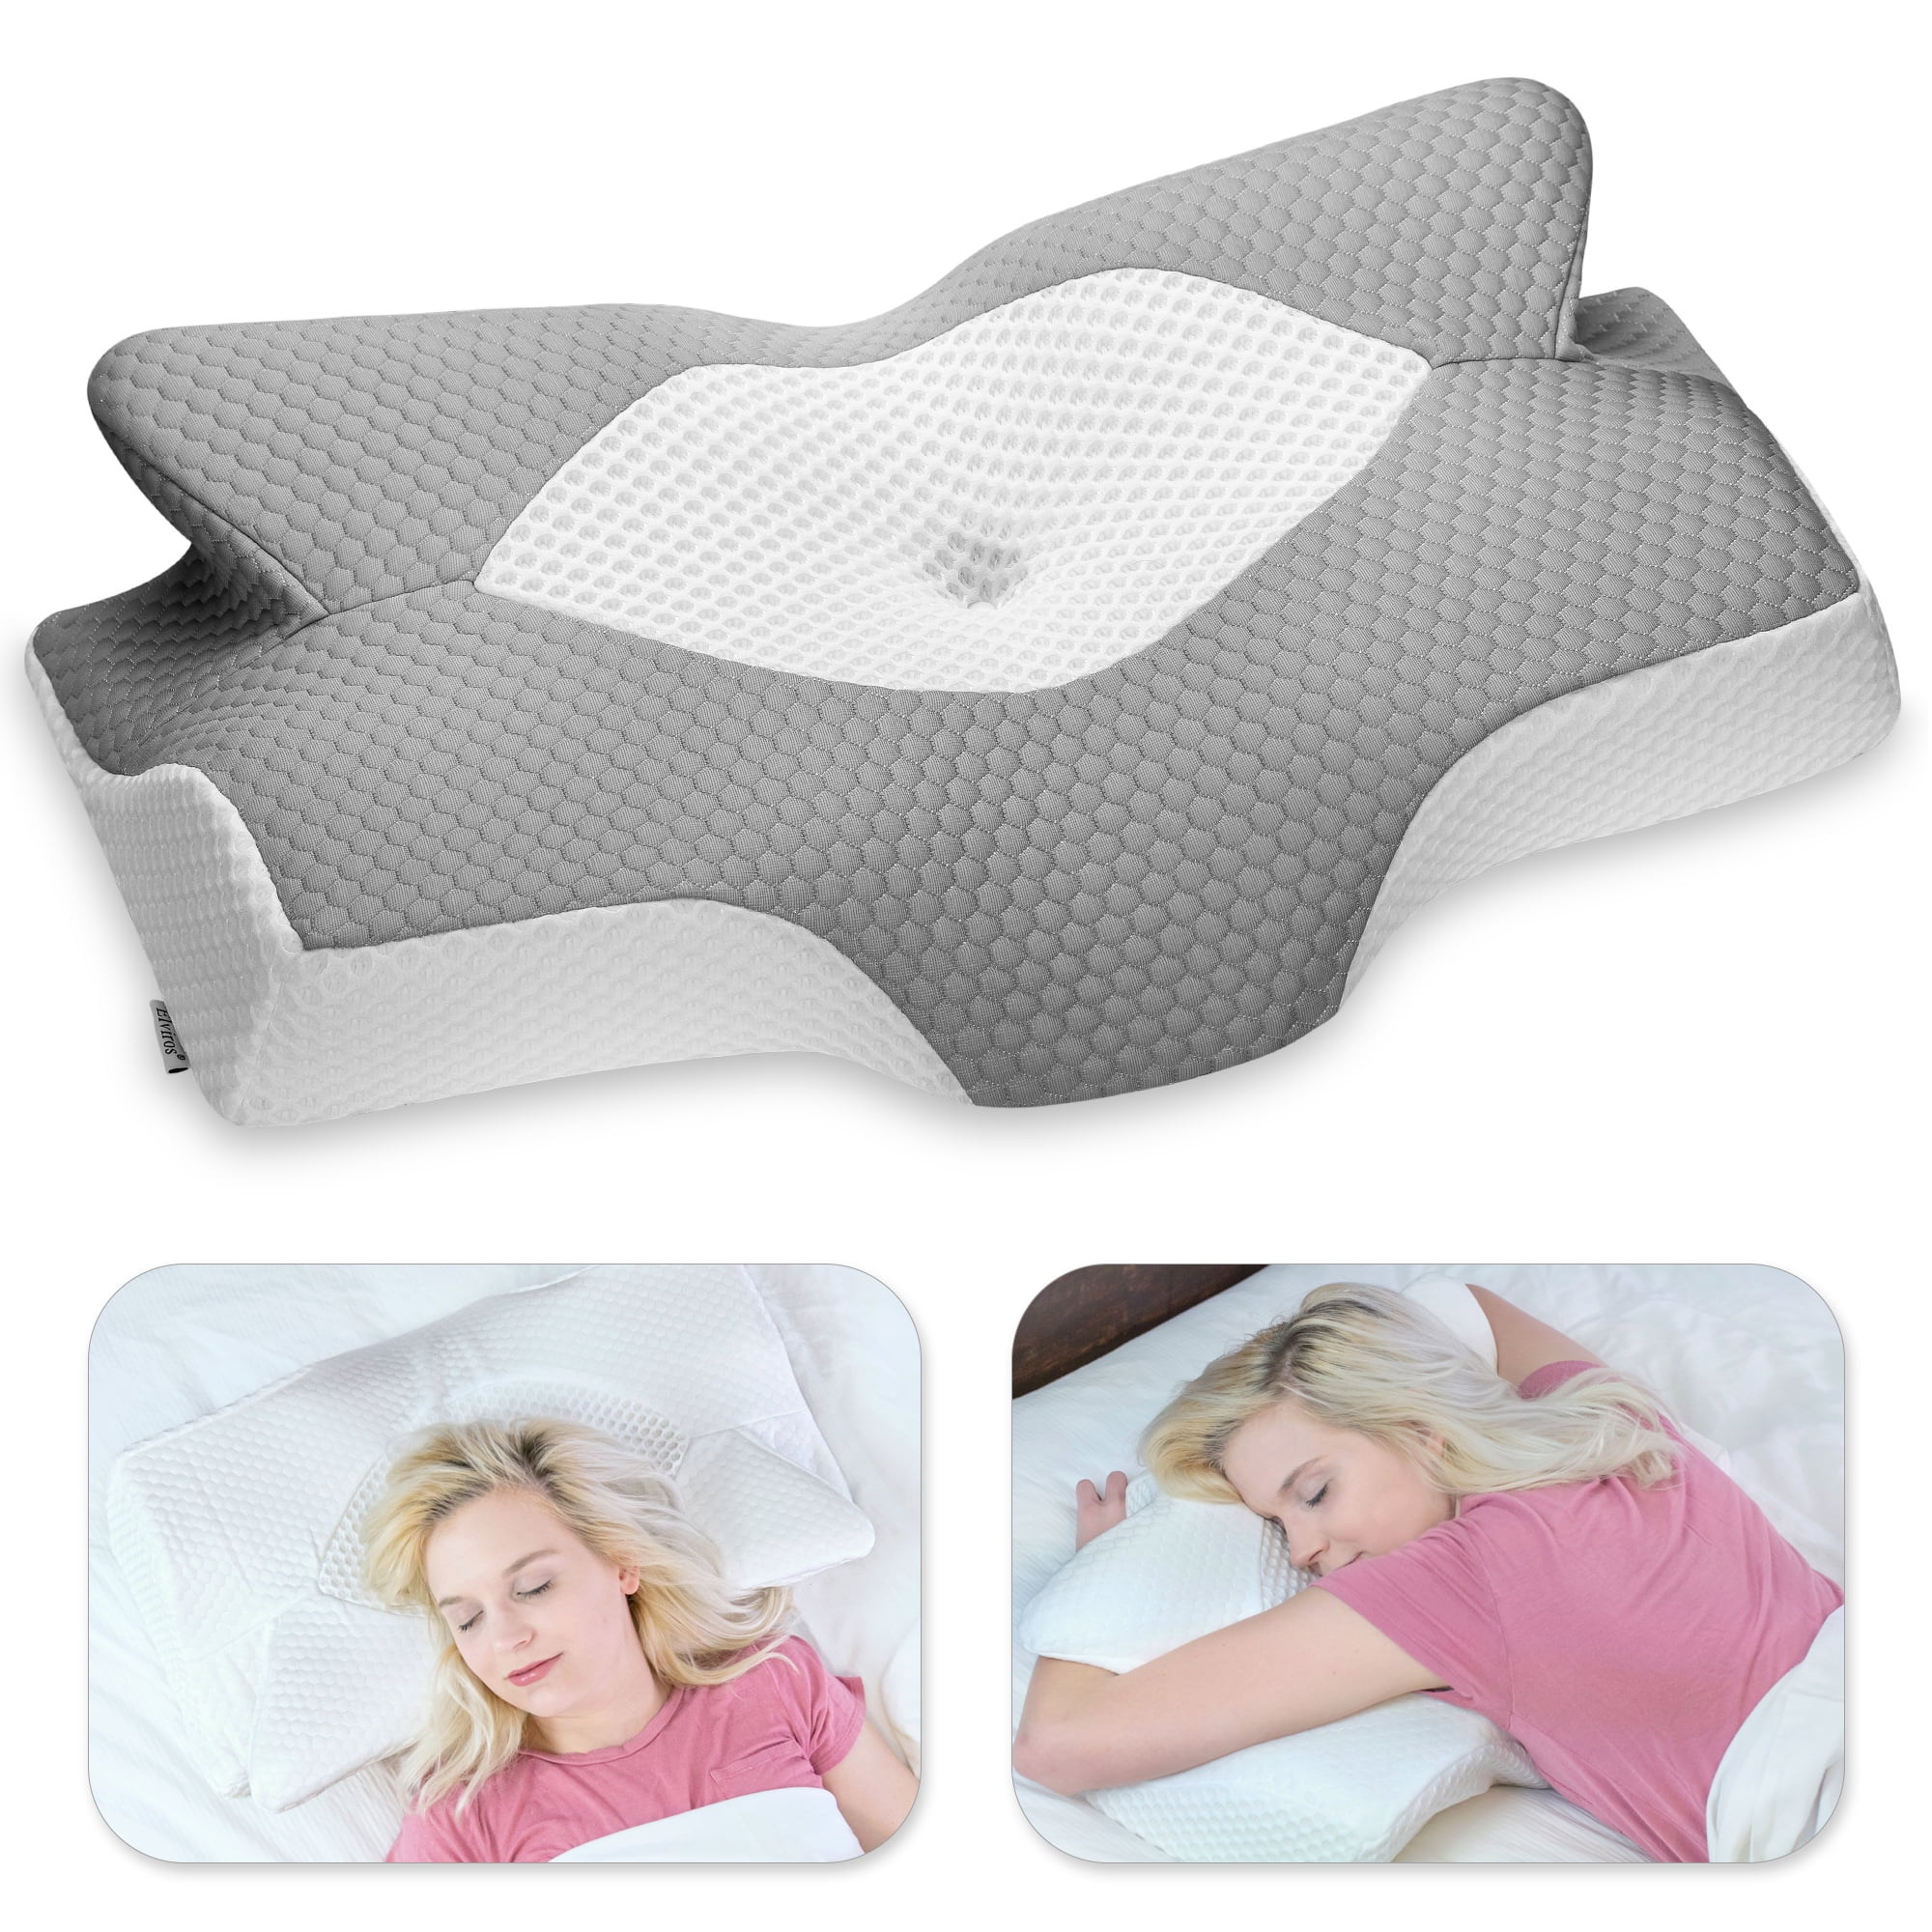 Elviros Cervical Memory Foam Pillow Contour Pillows For Neck And Shoulder Pain 